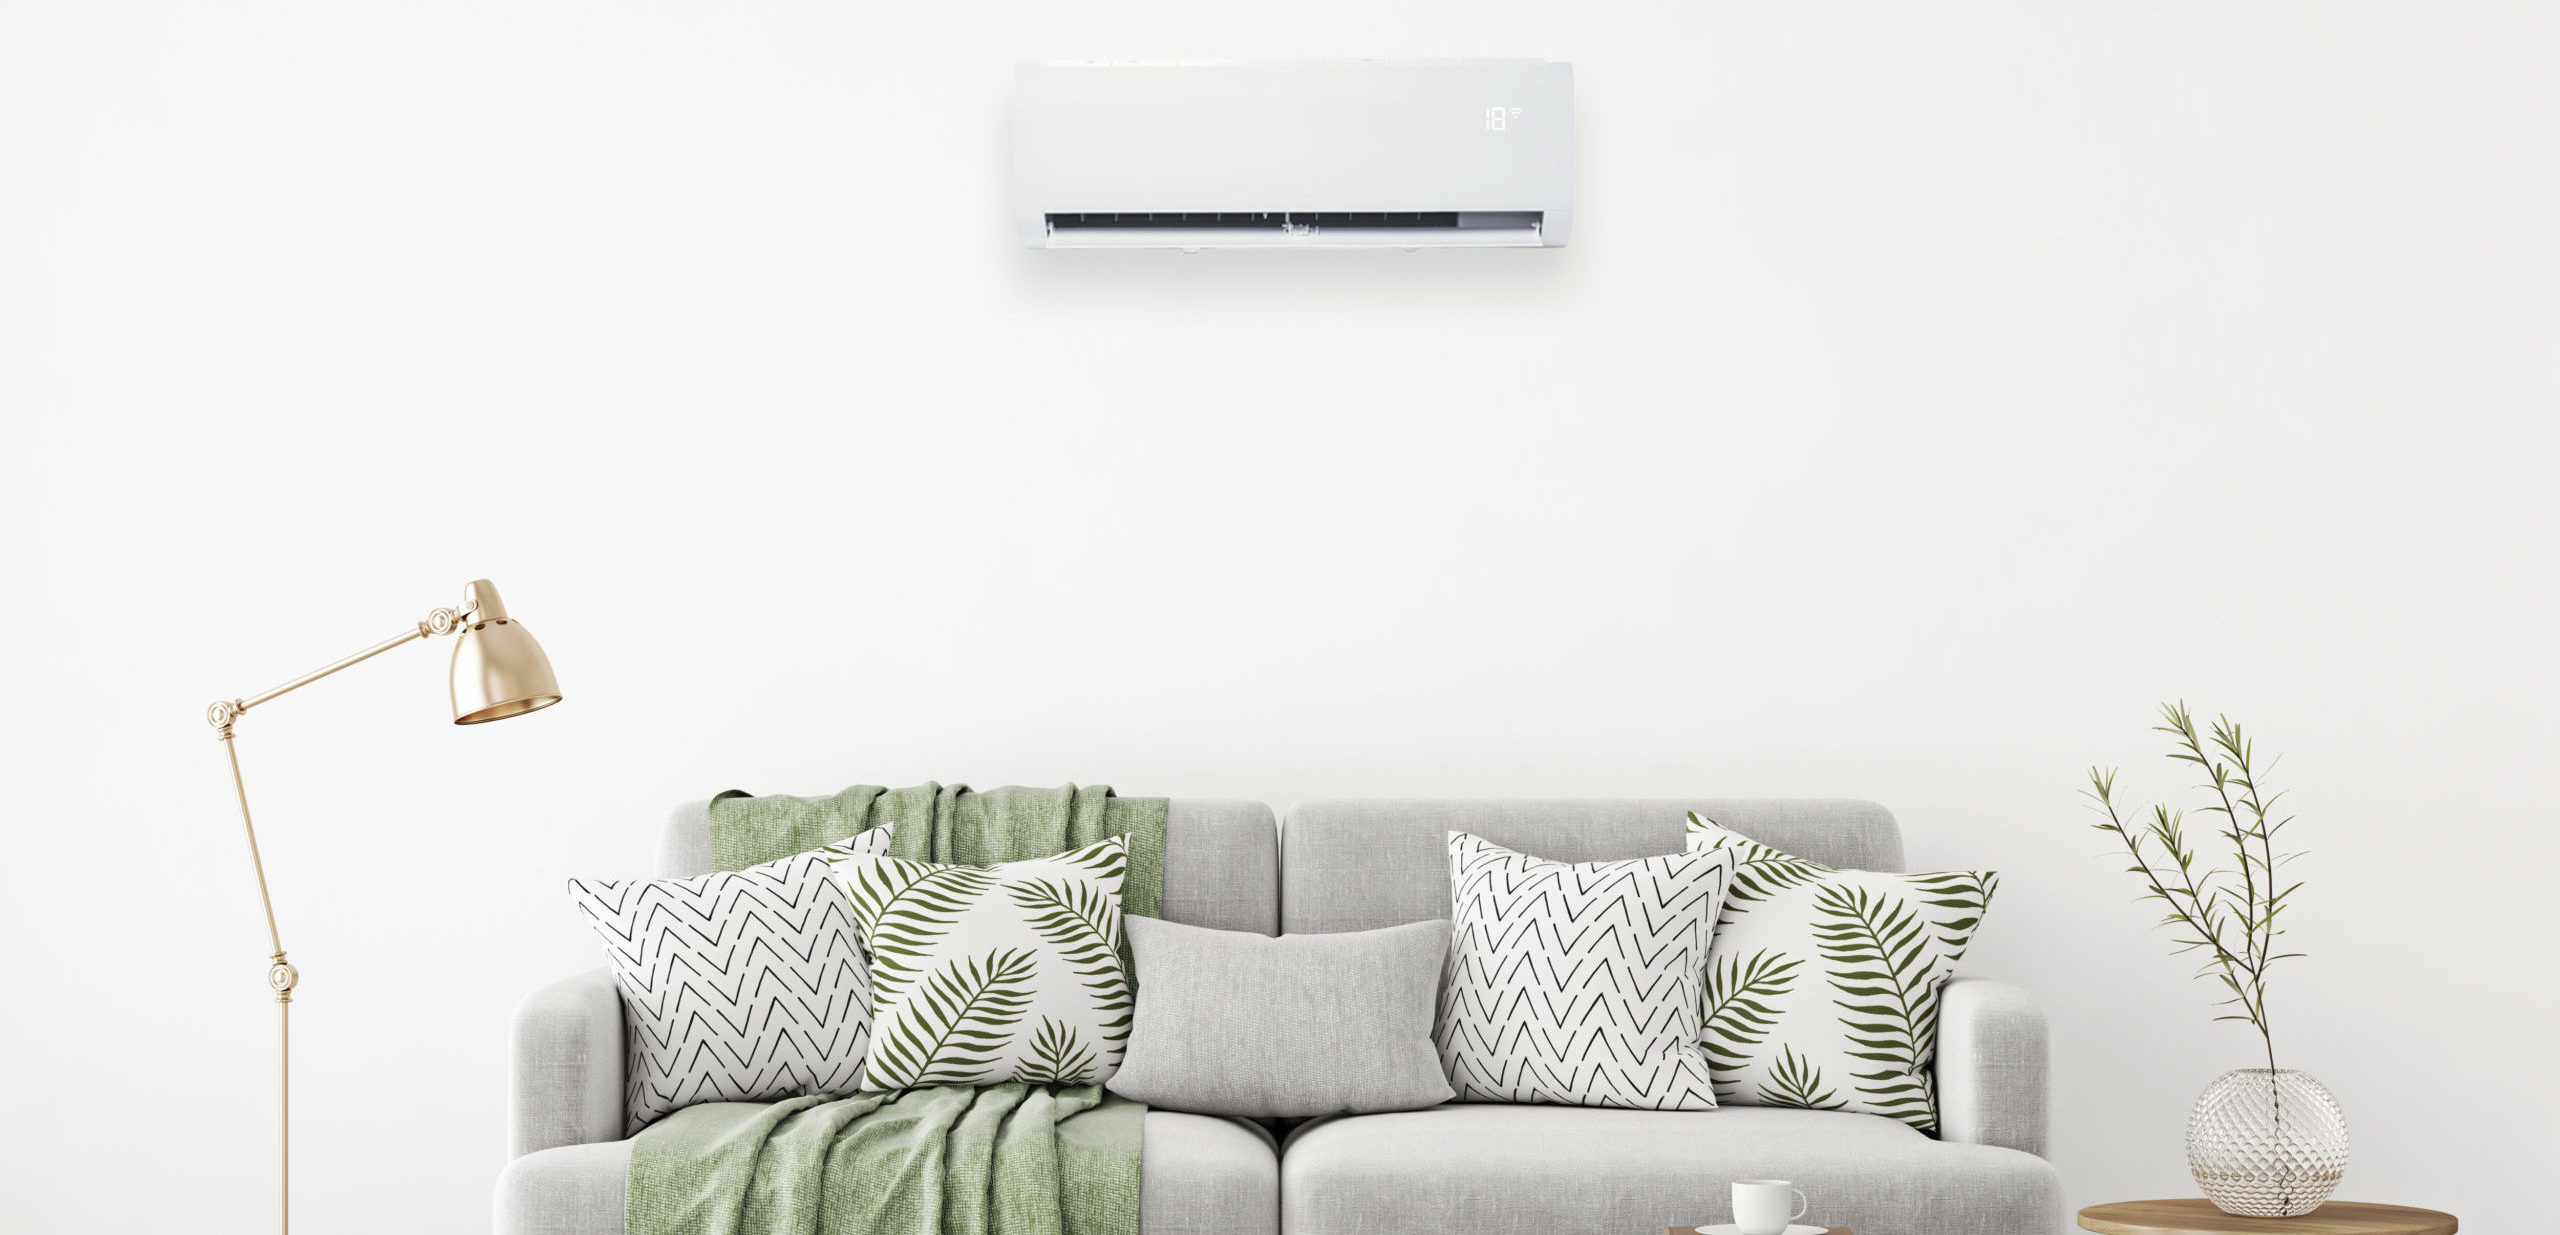 Split type airconditioner binnen unit in woonkamer